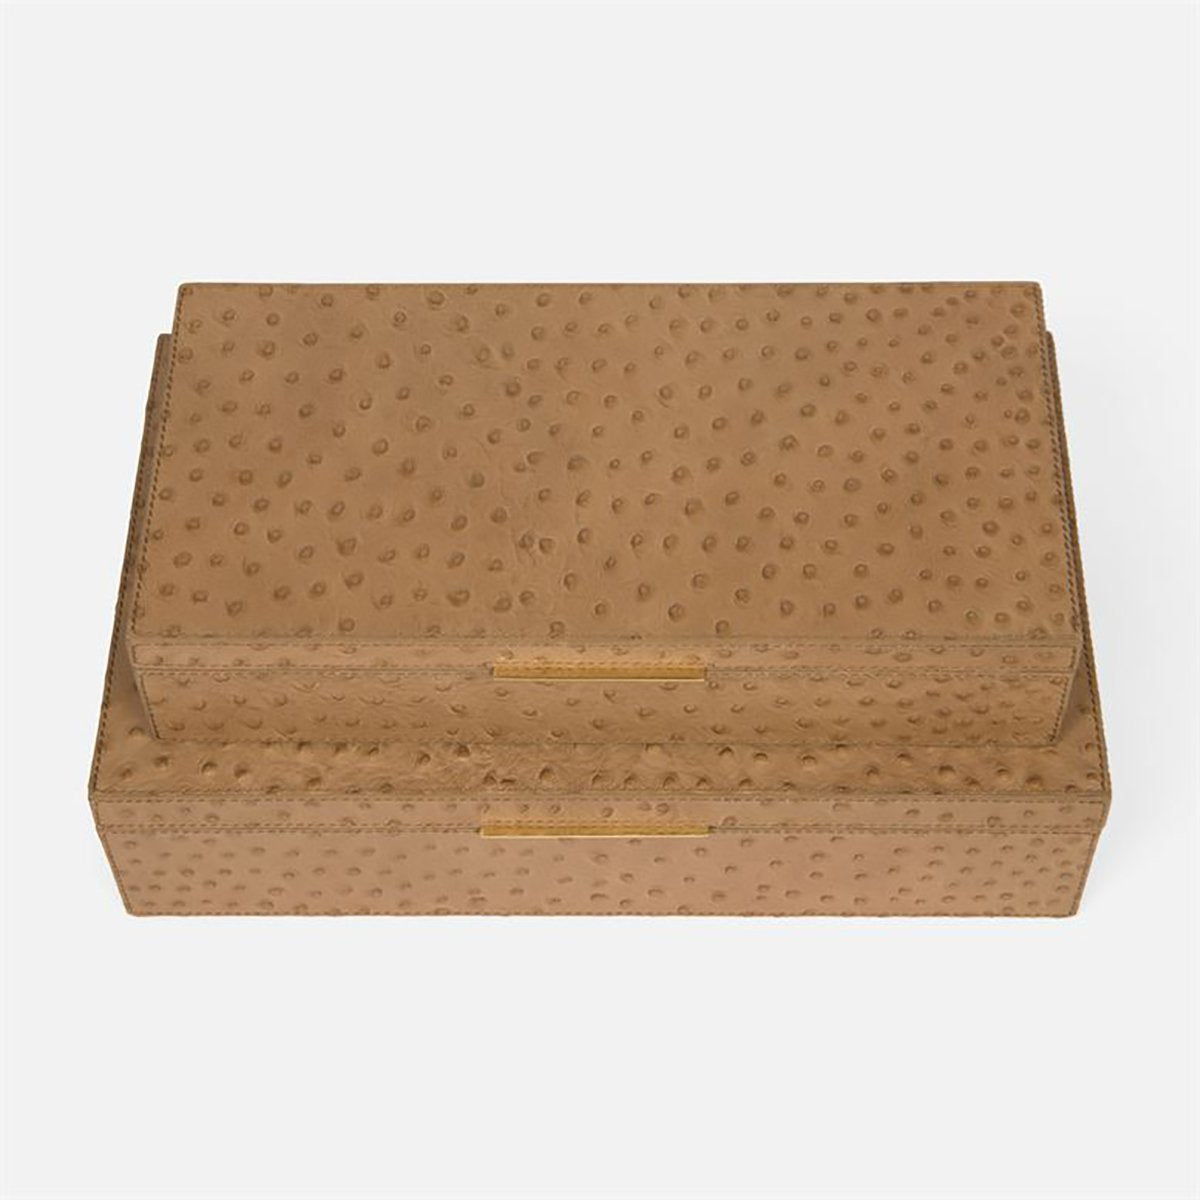 Made Goods Imani Full-Grain Leather Box, 2-Piece Set